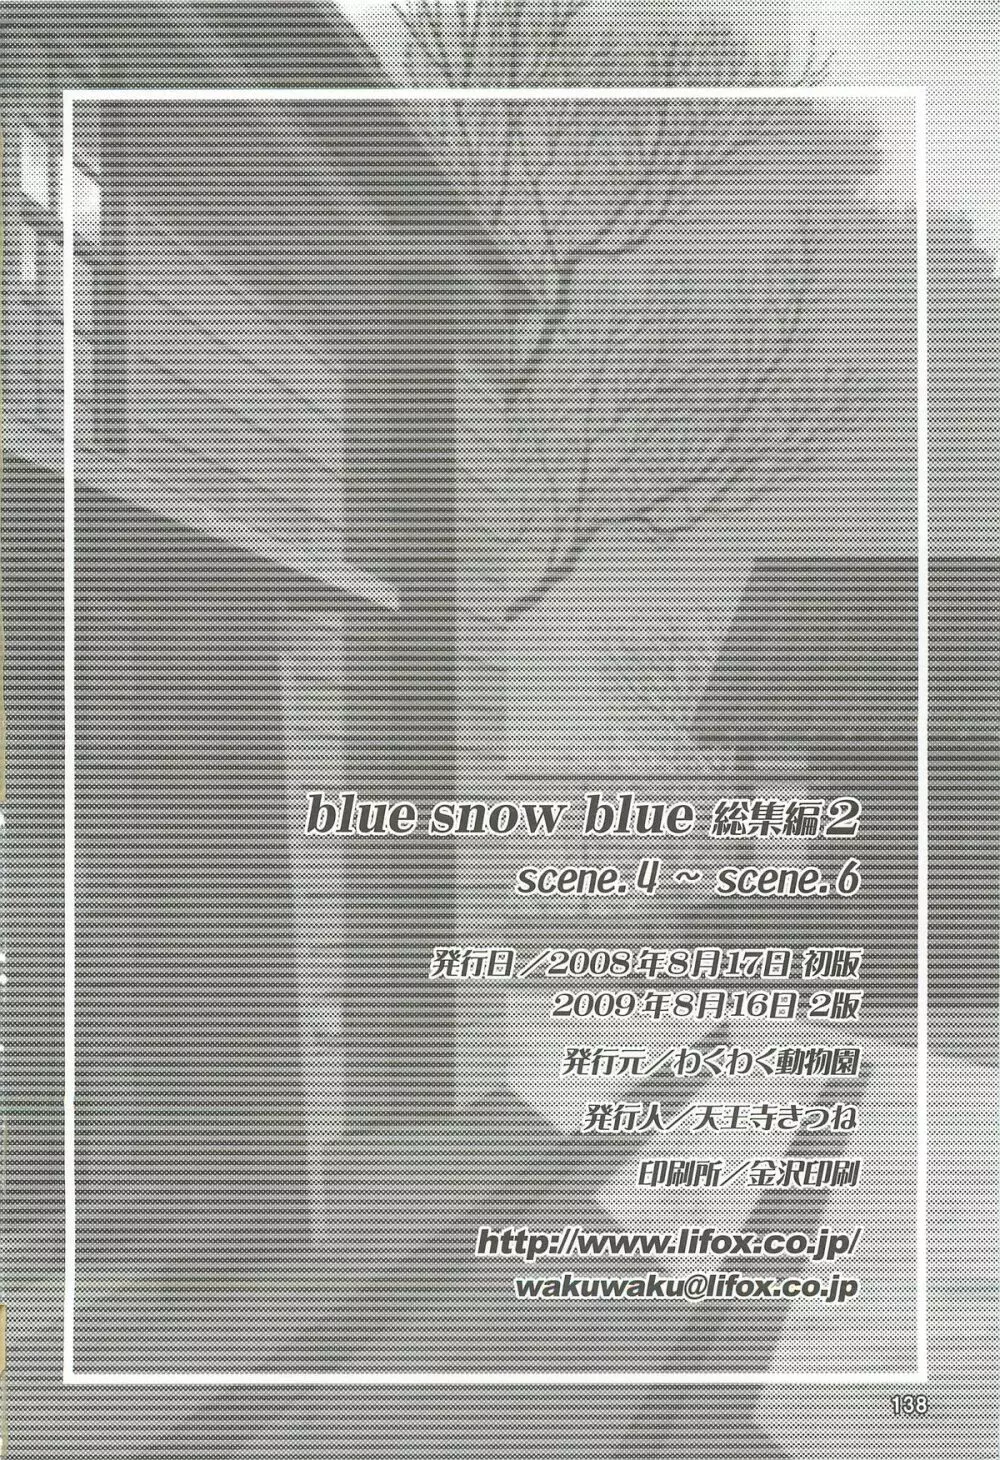 blue snow blue 総集編2 scene.4～scene.6 138ページ